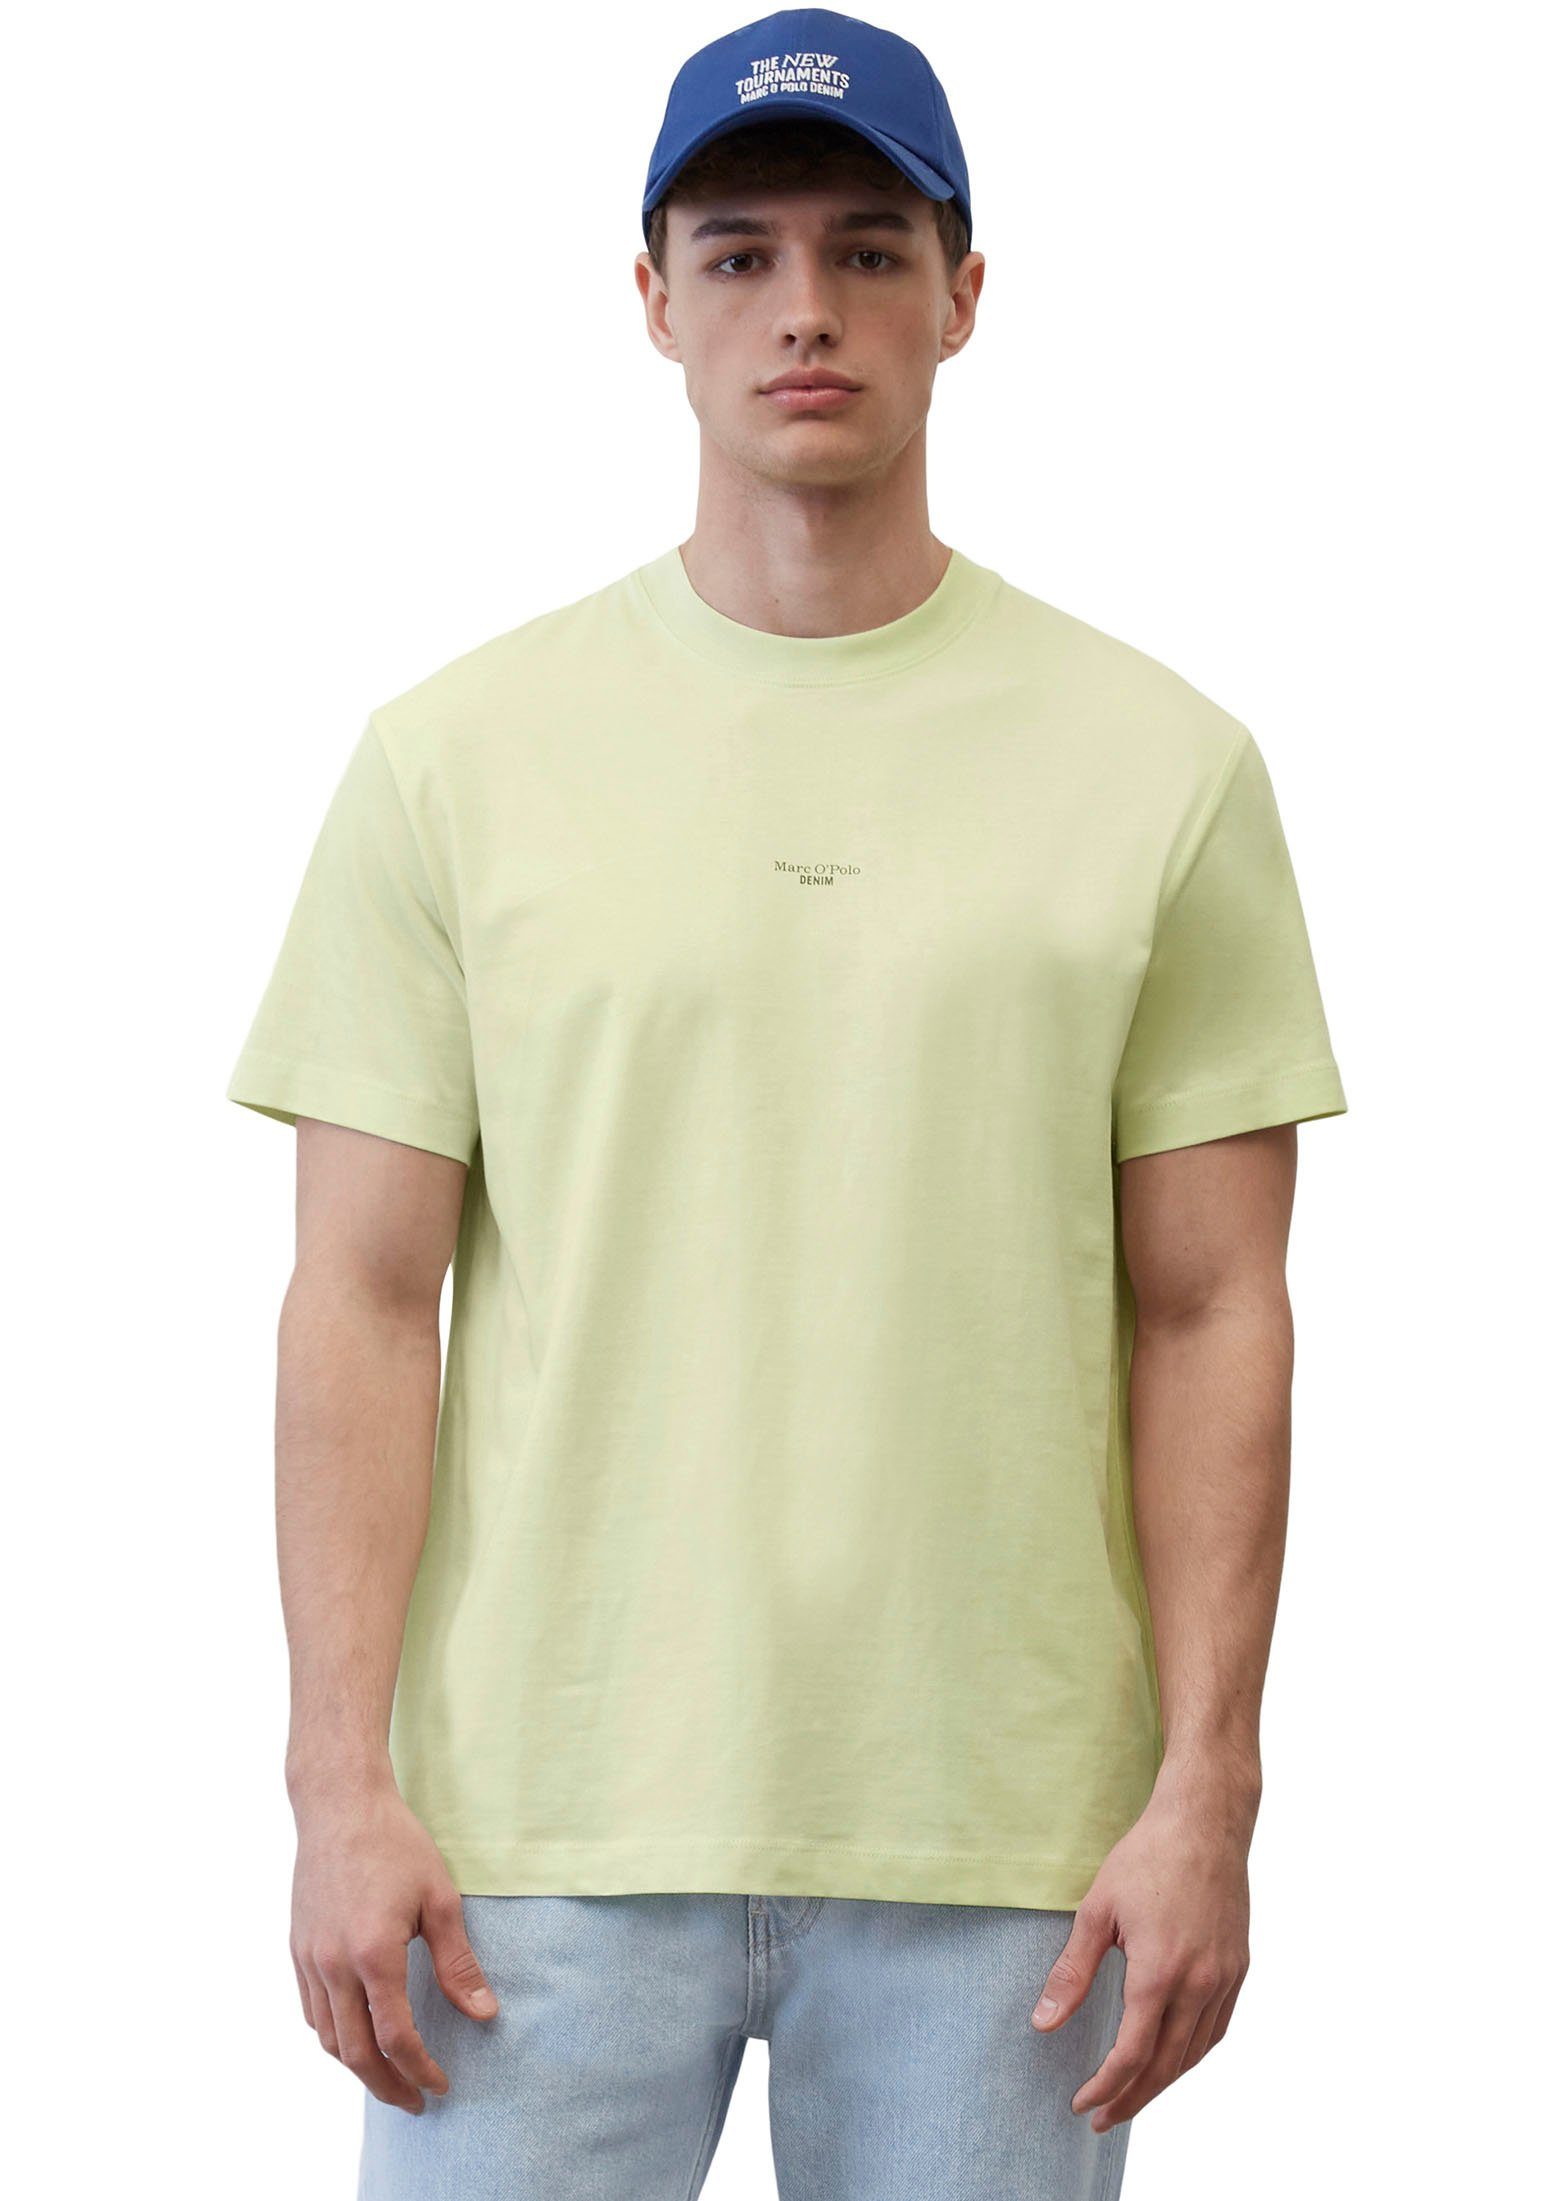 Logo-Druck T-Shirt Marc mit DENIM lime O'Polo kleinem